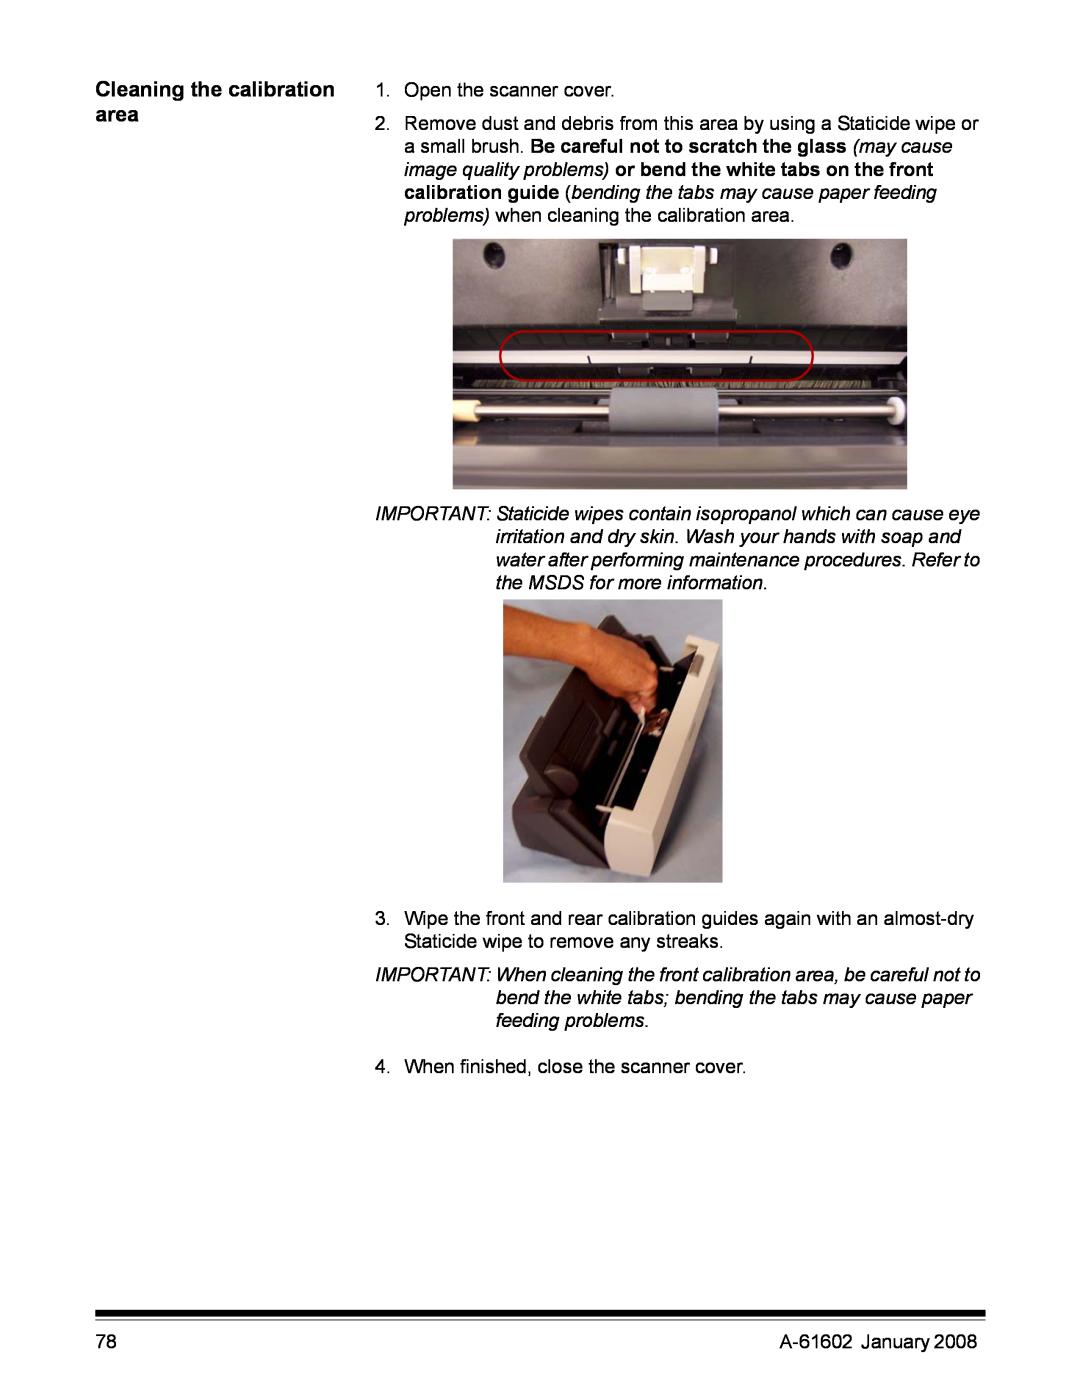 Kodak A-61602 manual Cleaning the calibration area 